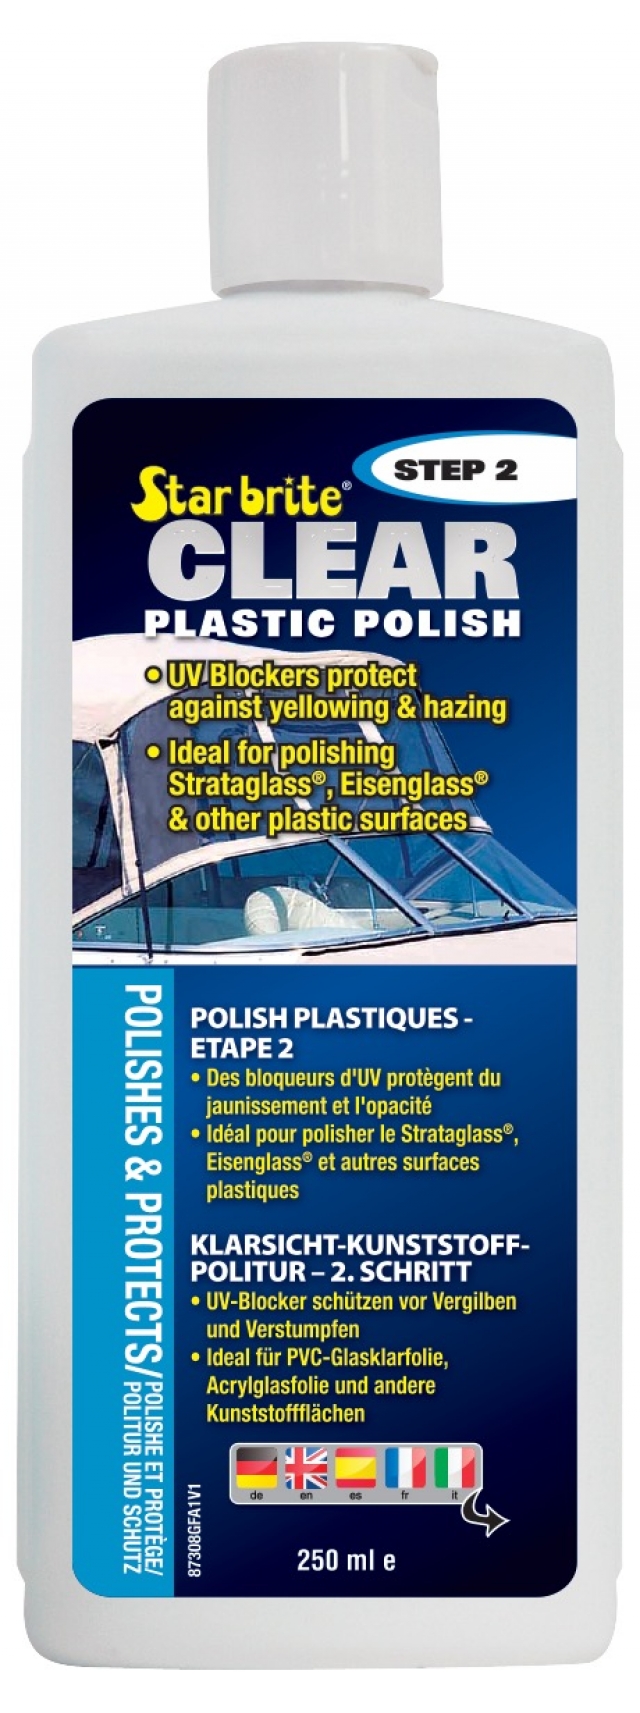 CLEAR PLASTIC POLISH STAR BRITE®